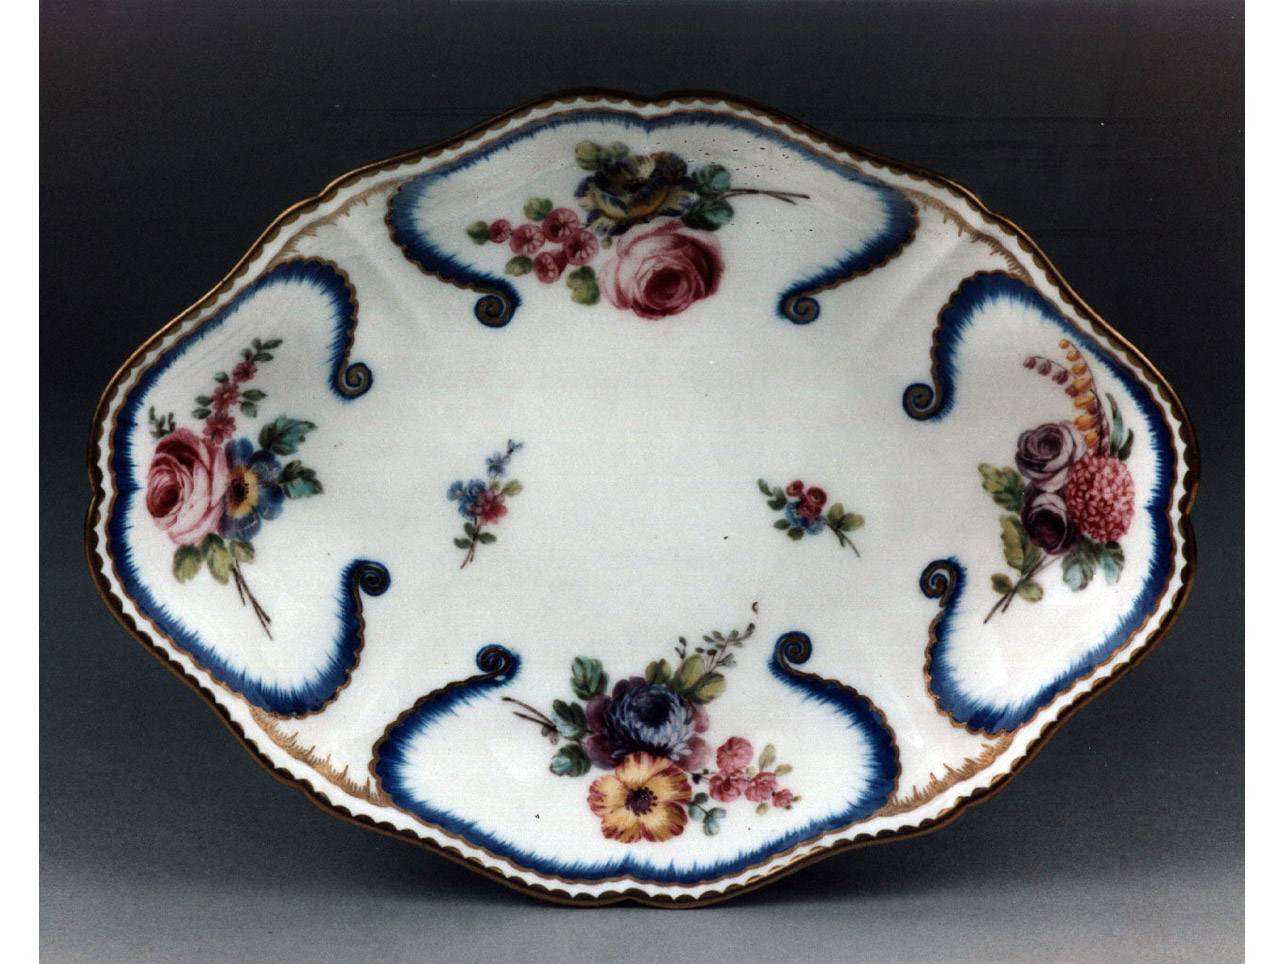 motivi decorativi floreali (vassoio) - manifattura di Sèvres (sec. XVIII)